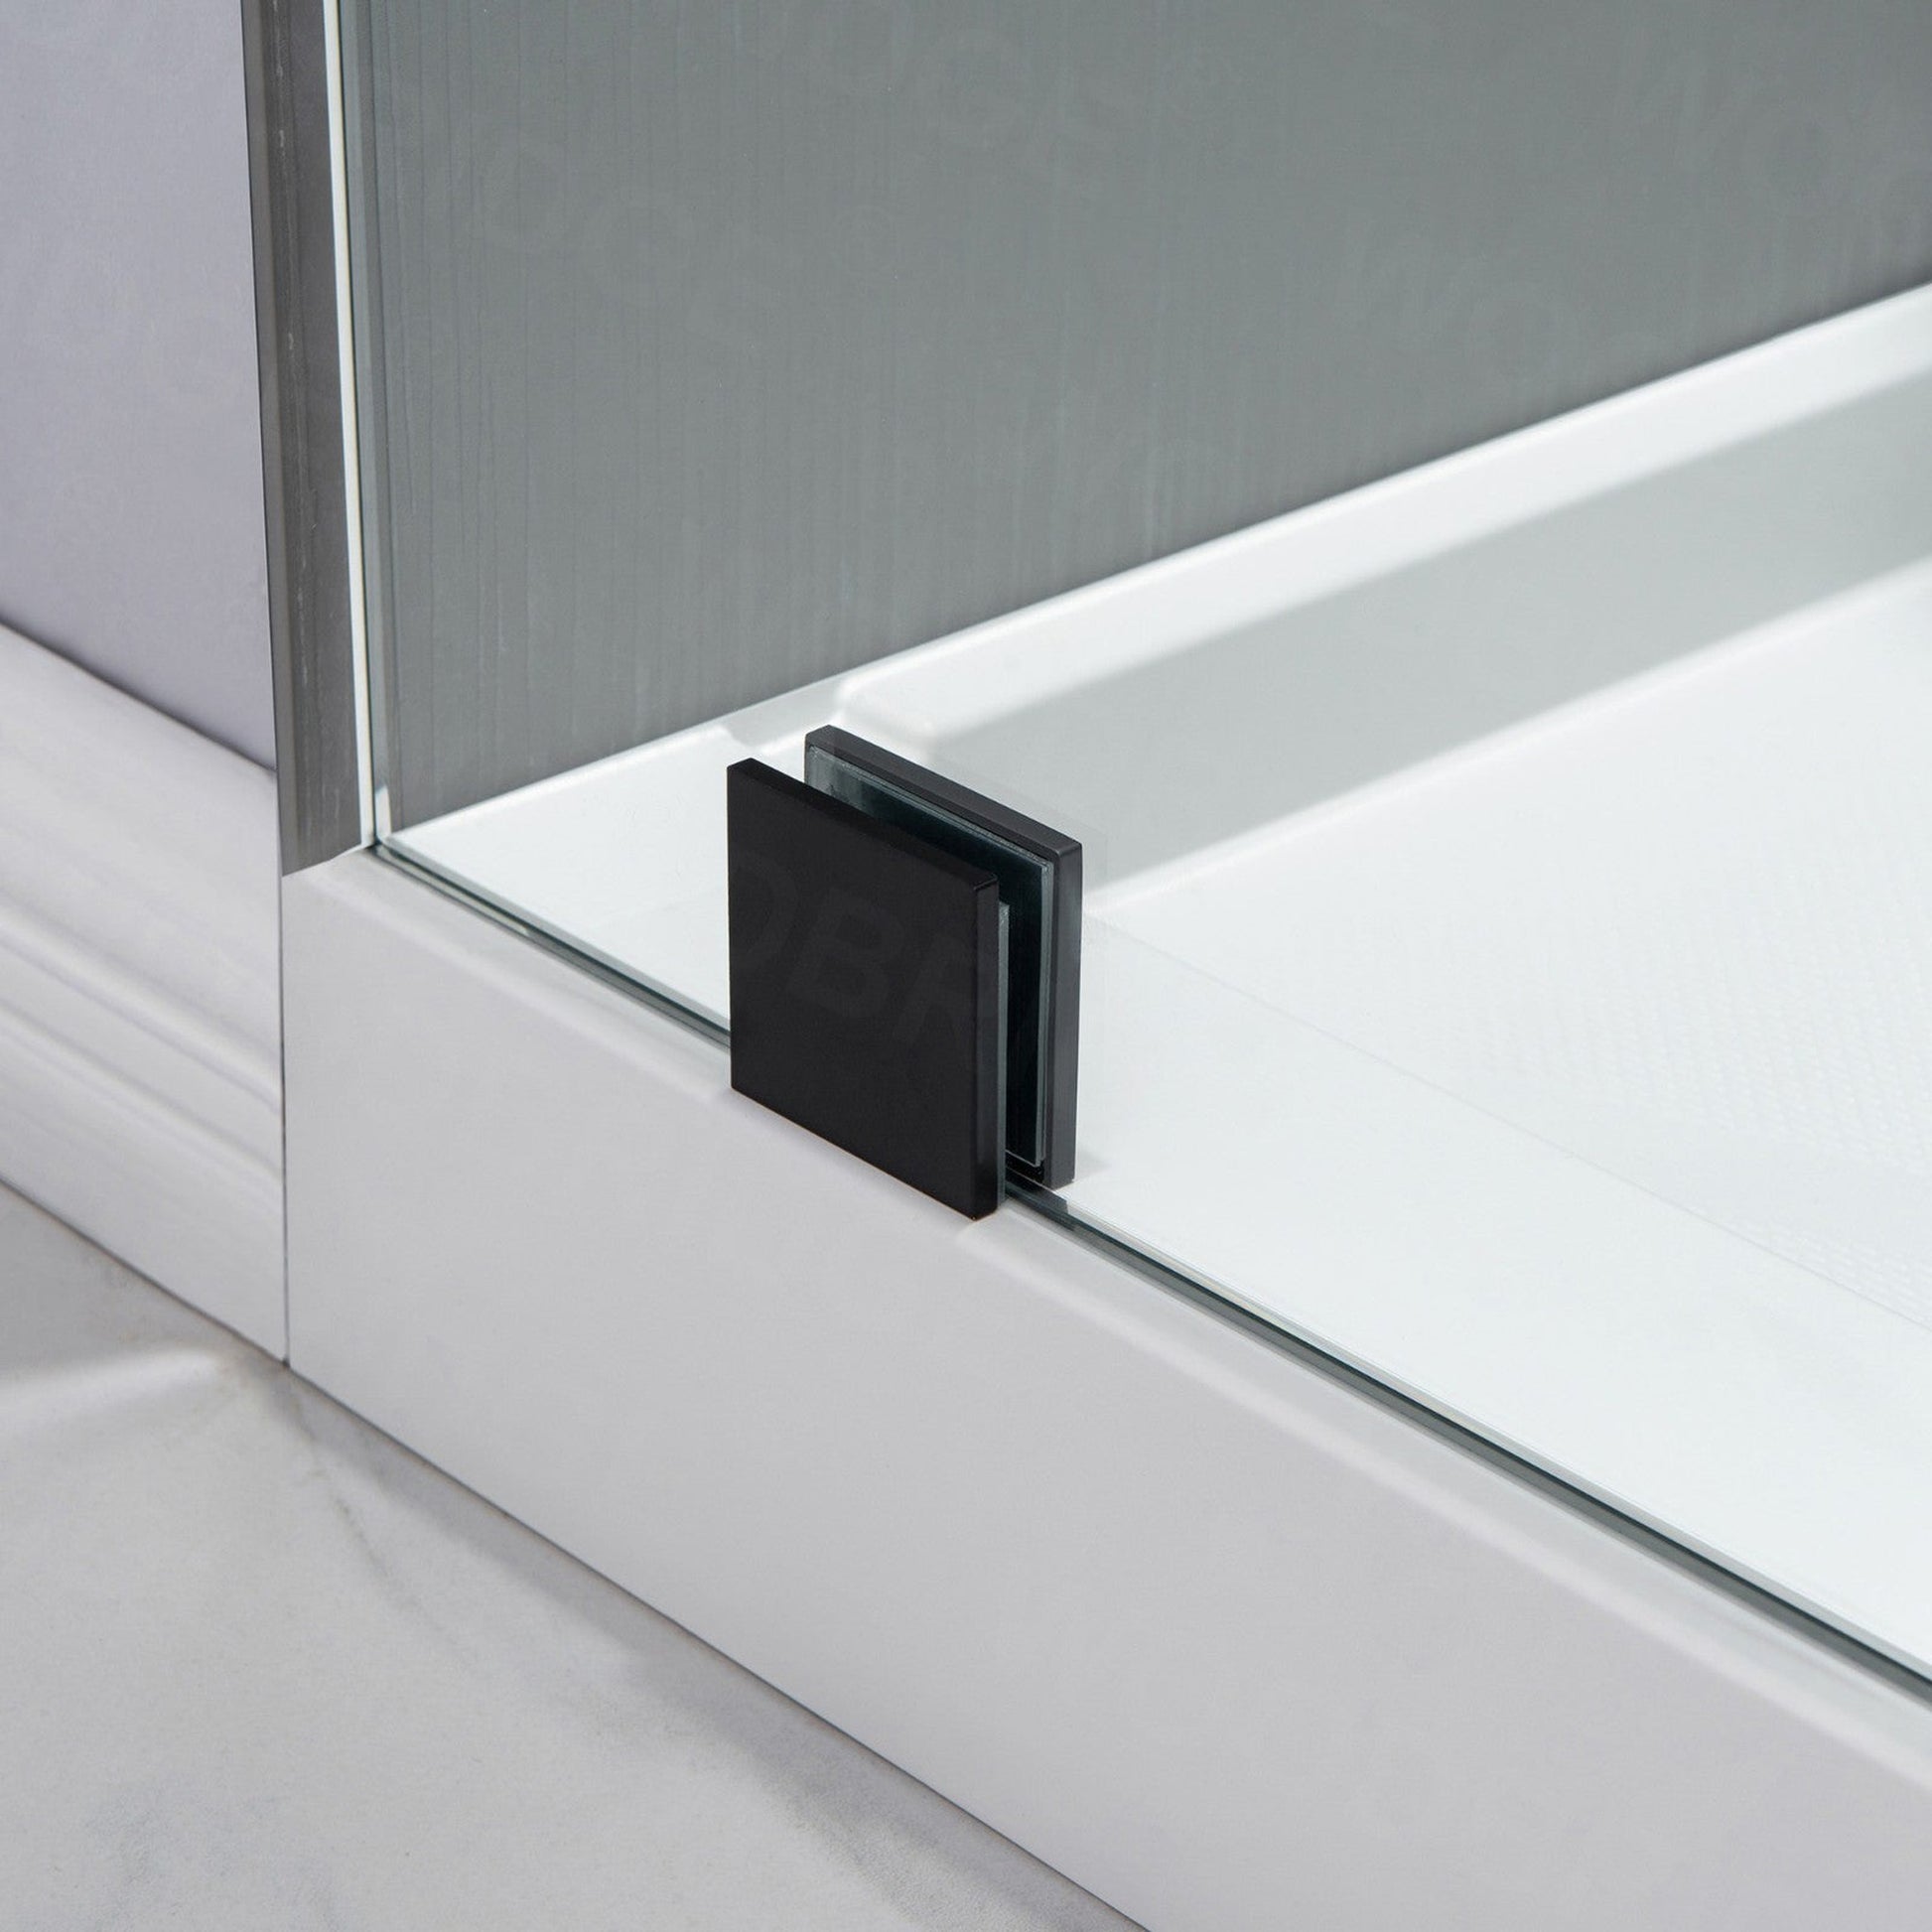 WoodBridge 60" W x 76" H Clear Tempered Glass Frameless Shower Door With Matte Black Hardware Finish